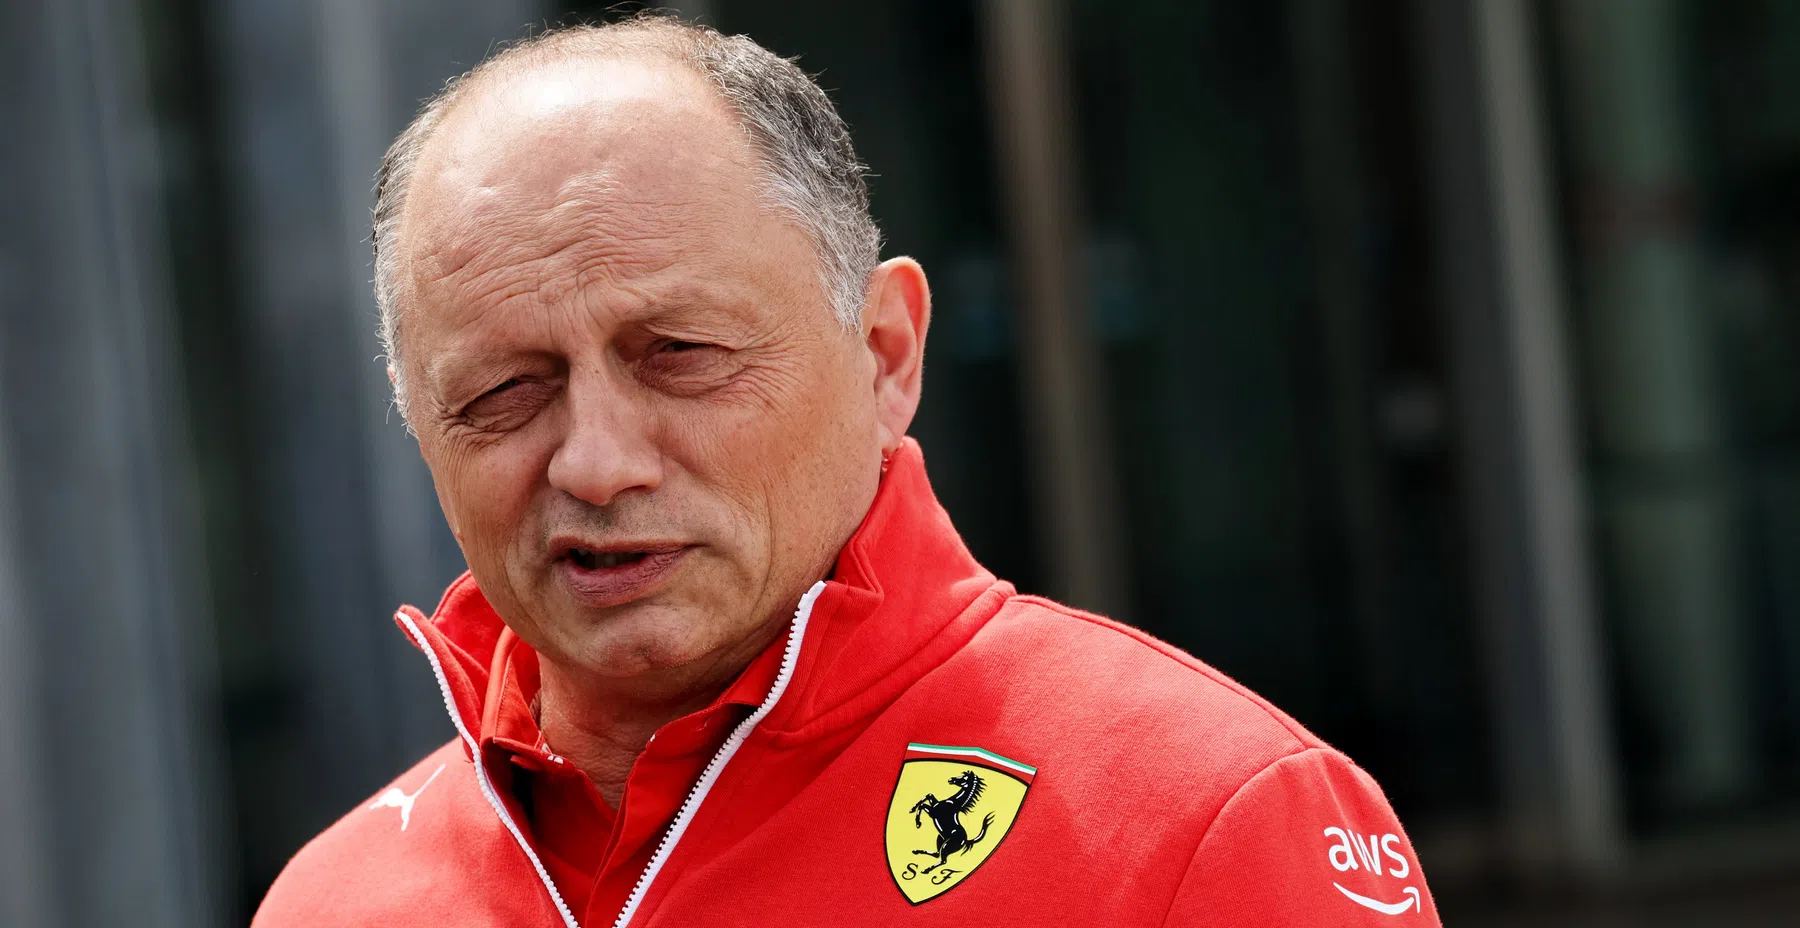 Vasseur, chefe de equipe da Ferrari, fala sobre o impacto de Newey